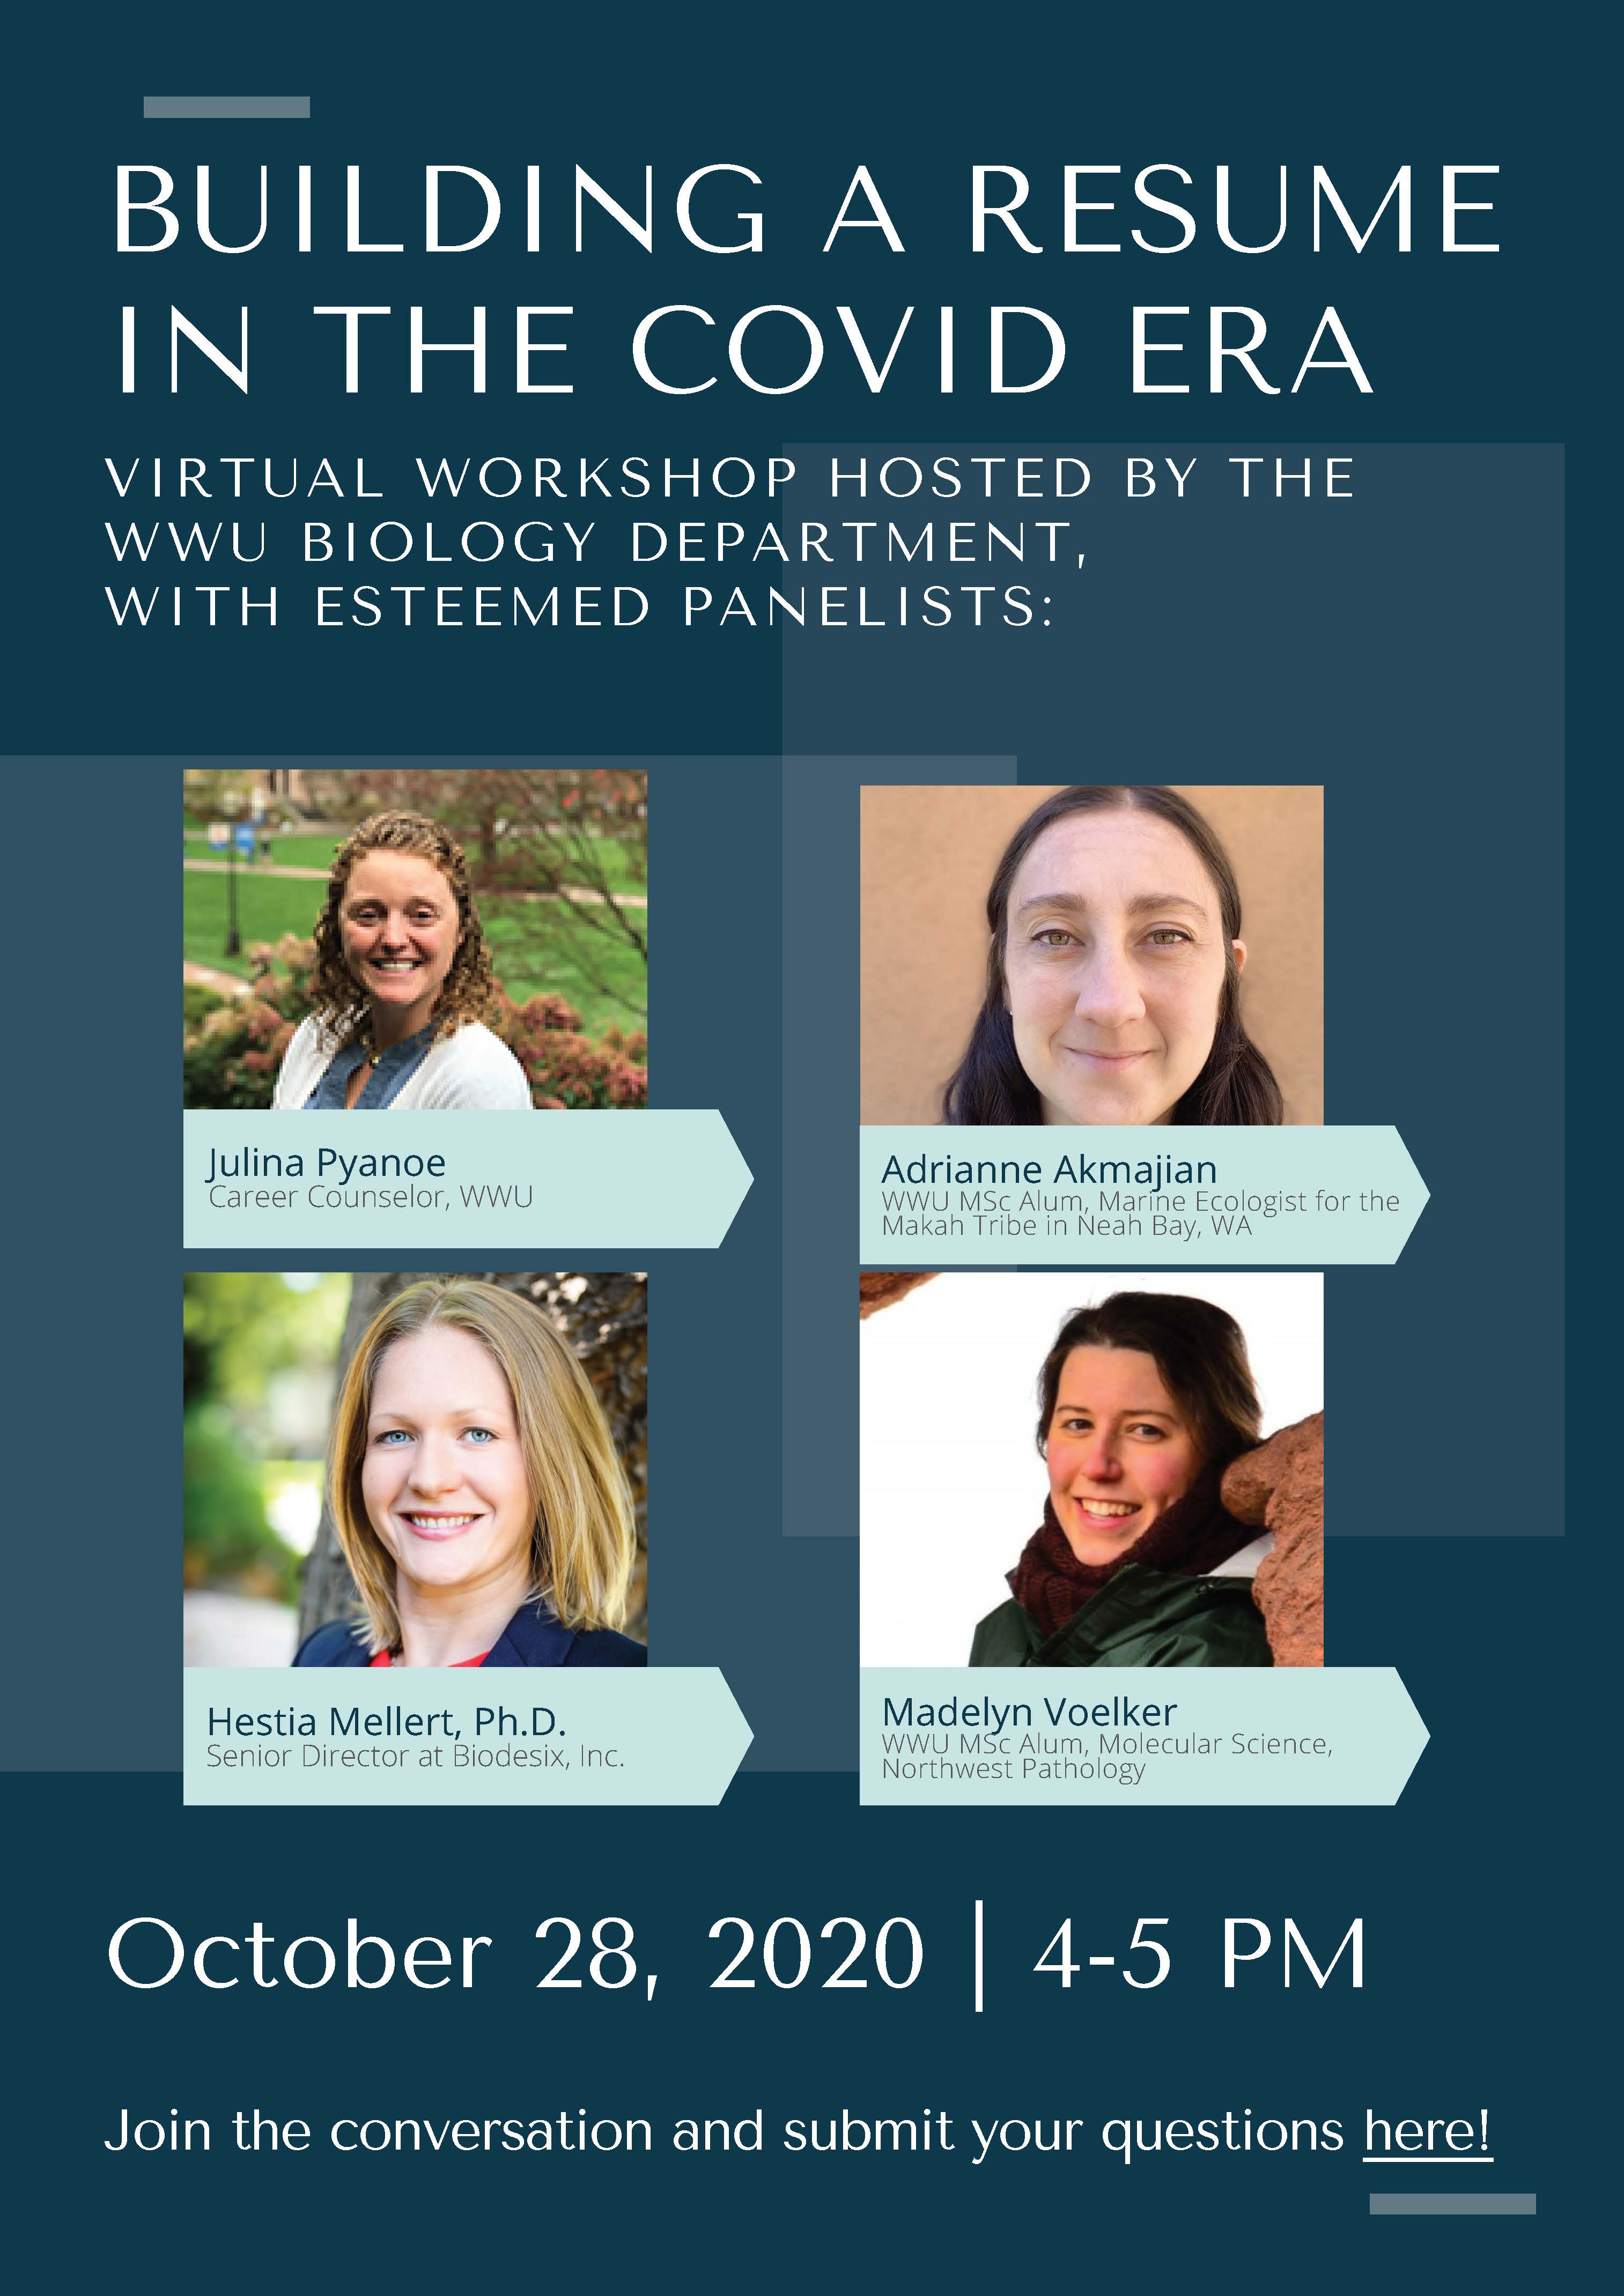 Building A Resume in the COVID-Era - Julina Pyanoe, Adrianne Akmajian, Hestia Mellert. Madelyn Voelker - Oct. 28, 2020 - 4-5 PM